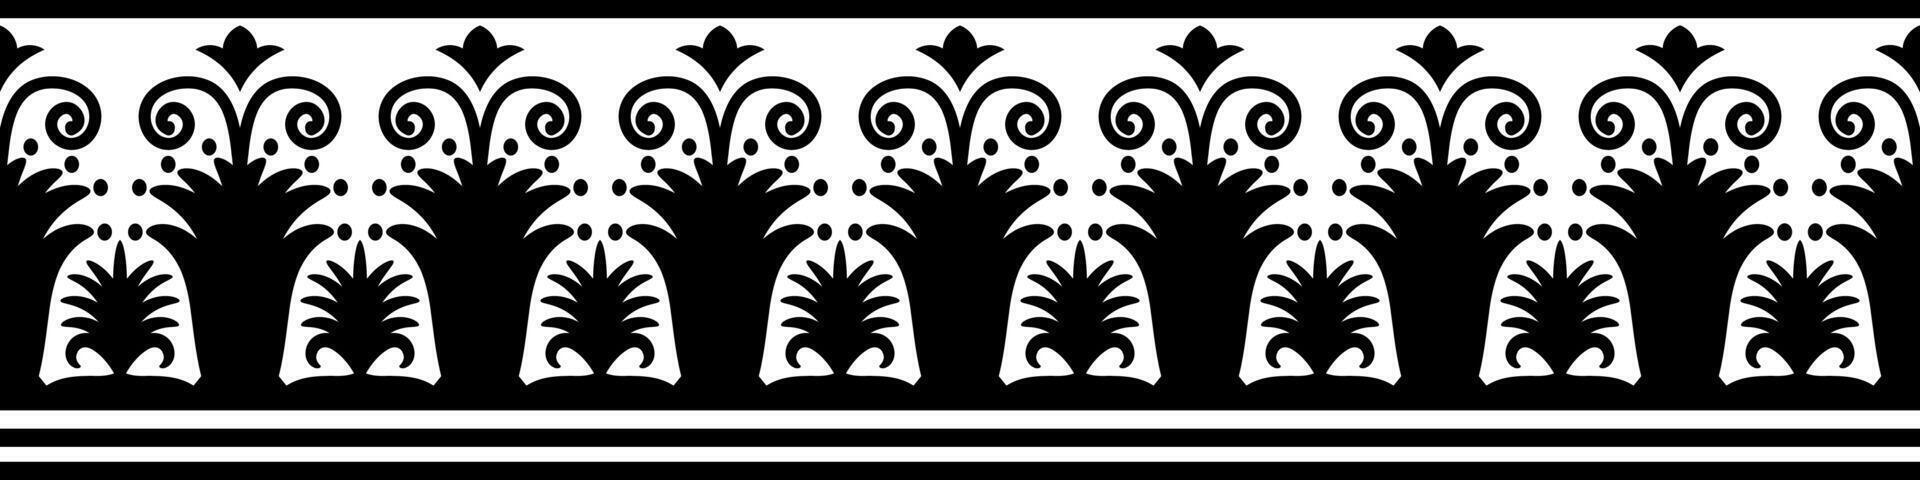 simple mandala Horizontal mandala line pattern. Black pattern brush on white background. vector